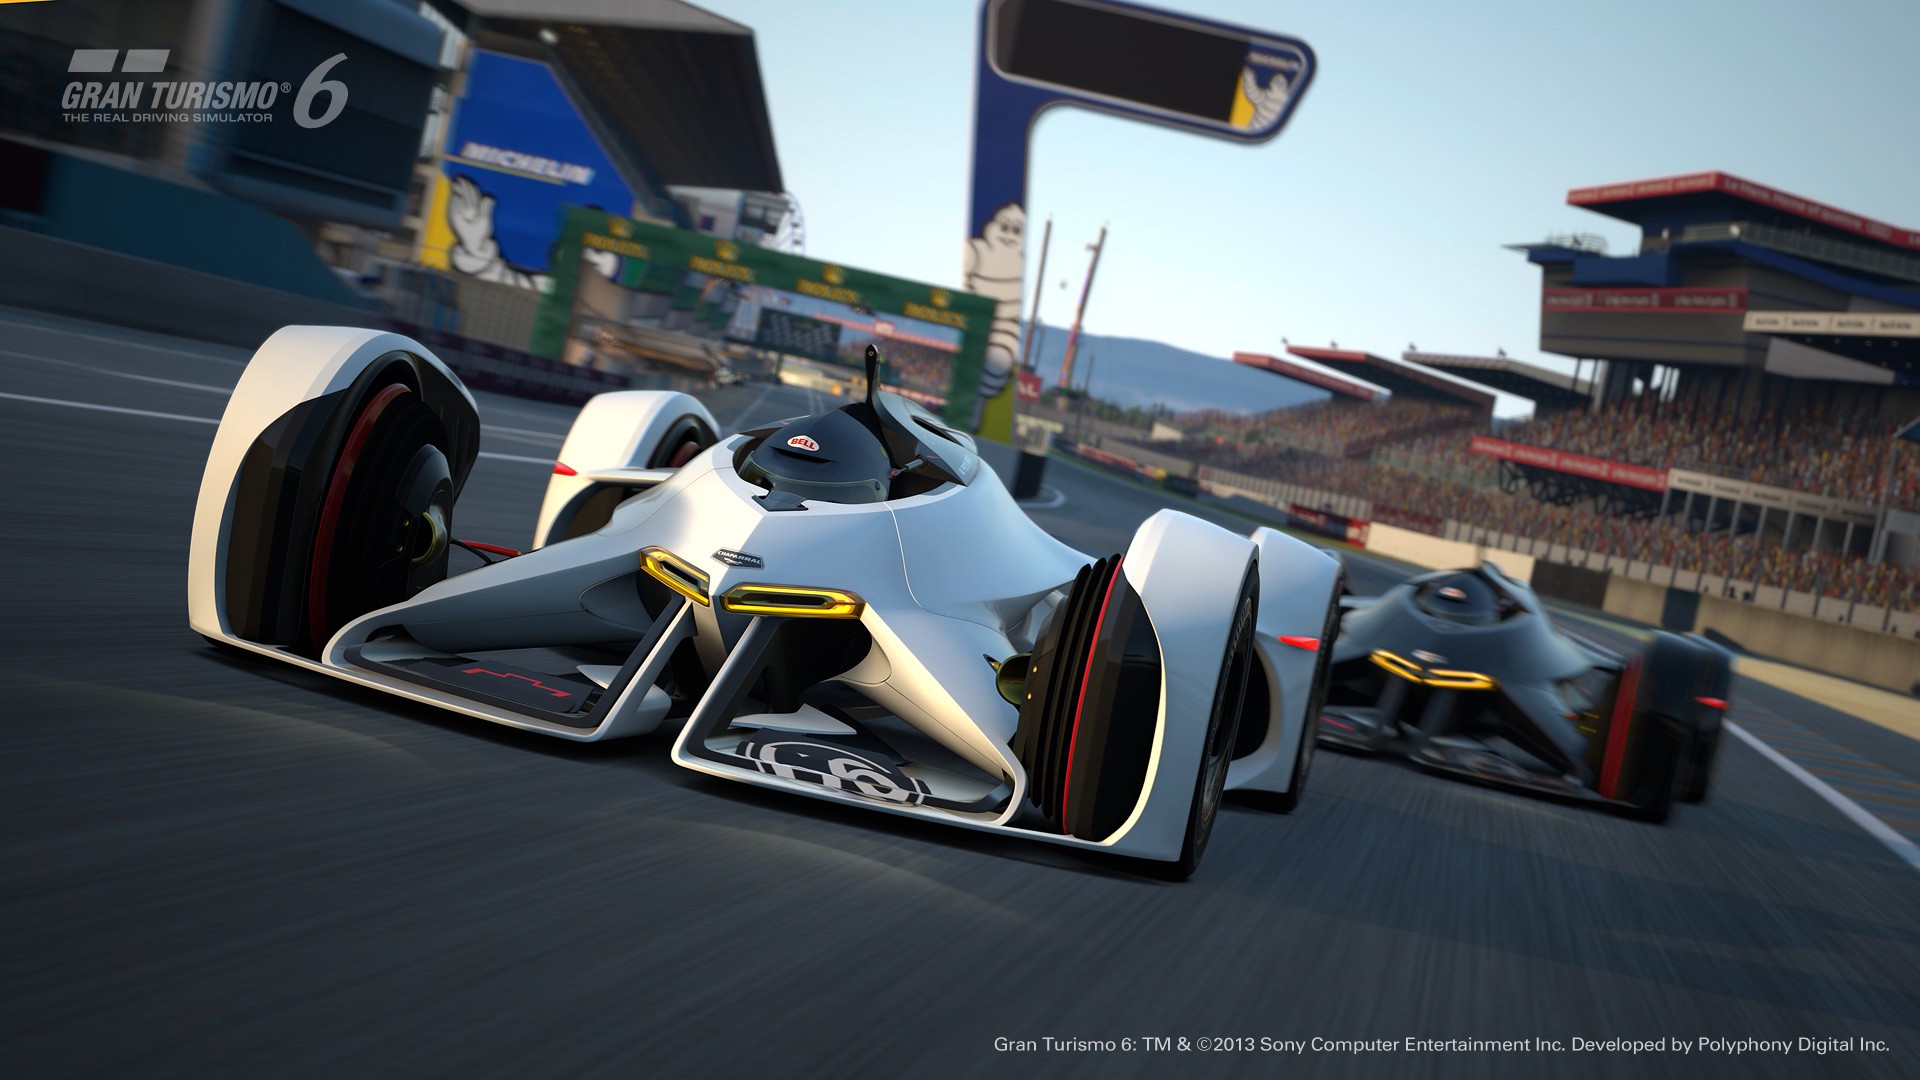 General 1920x1080 Vision Gran Turismo 2013 (Year) video games racing car Gran Turismo 6 Sony